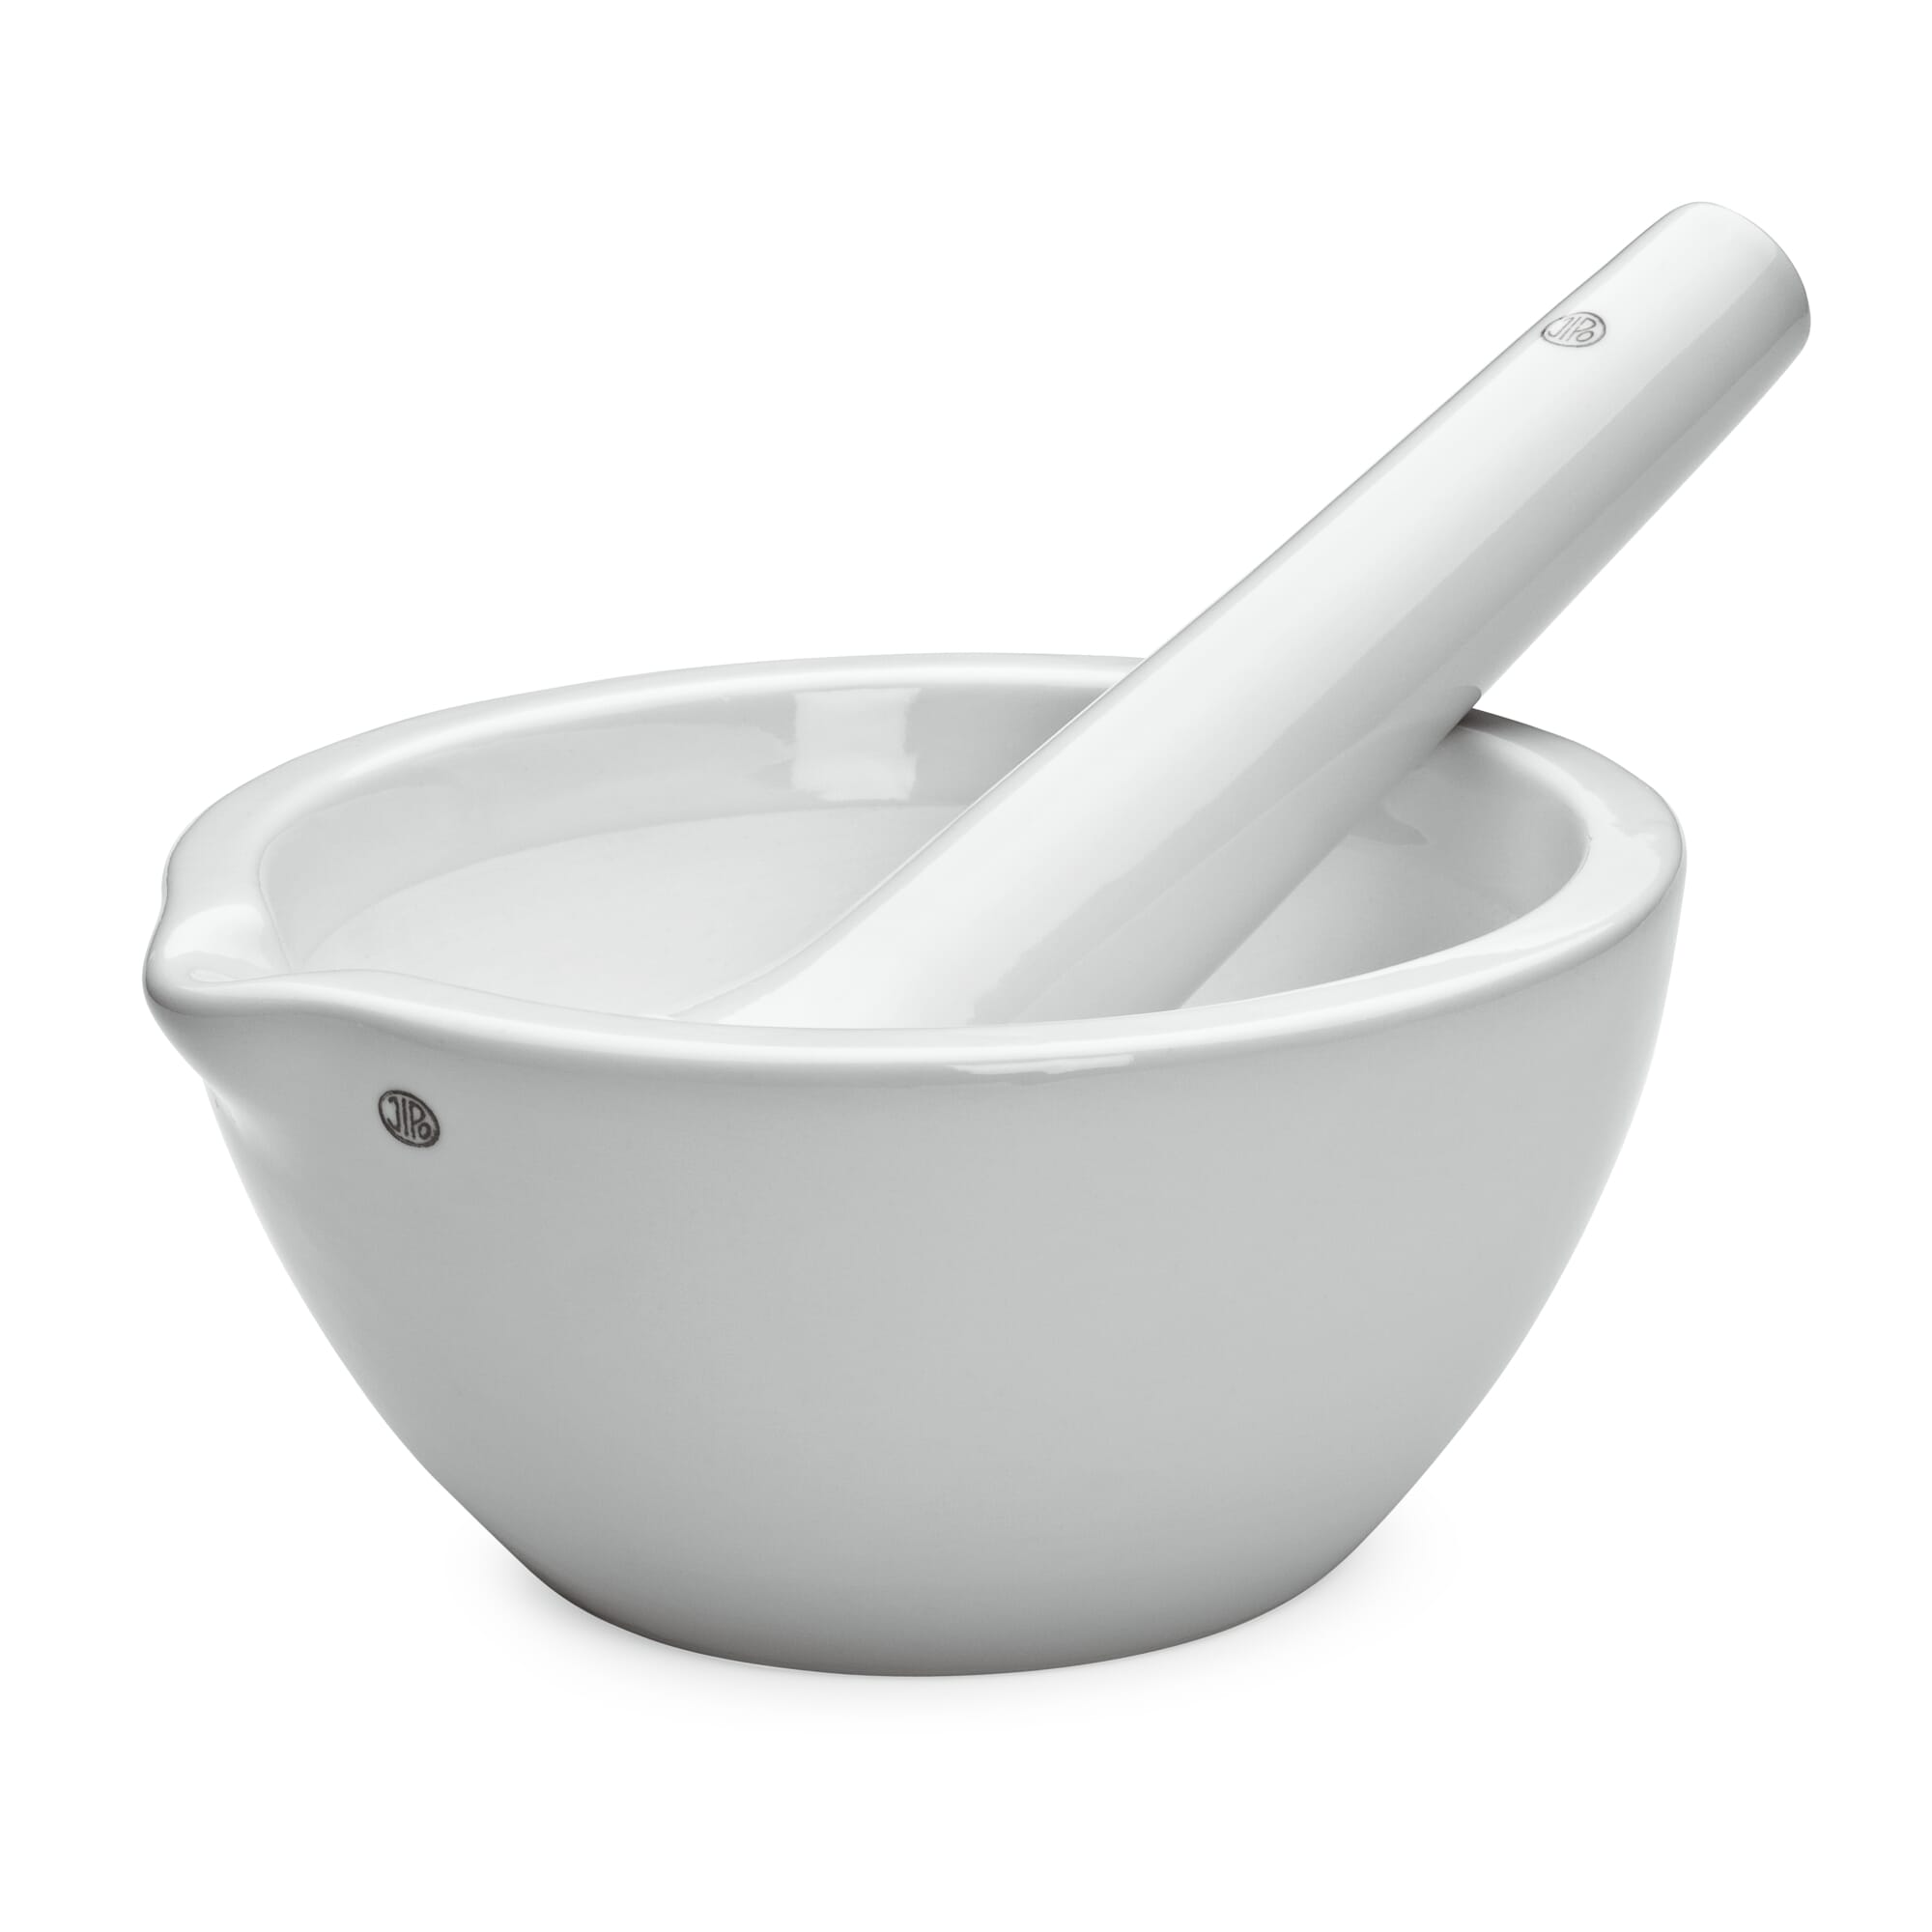 https://assets.manufactum.de/p/086/086563/86563_01.jpg/grating-bowl-laboratory-porcelain.jpg